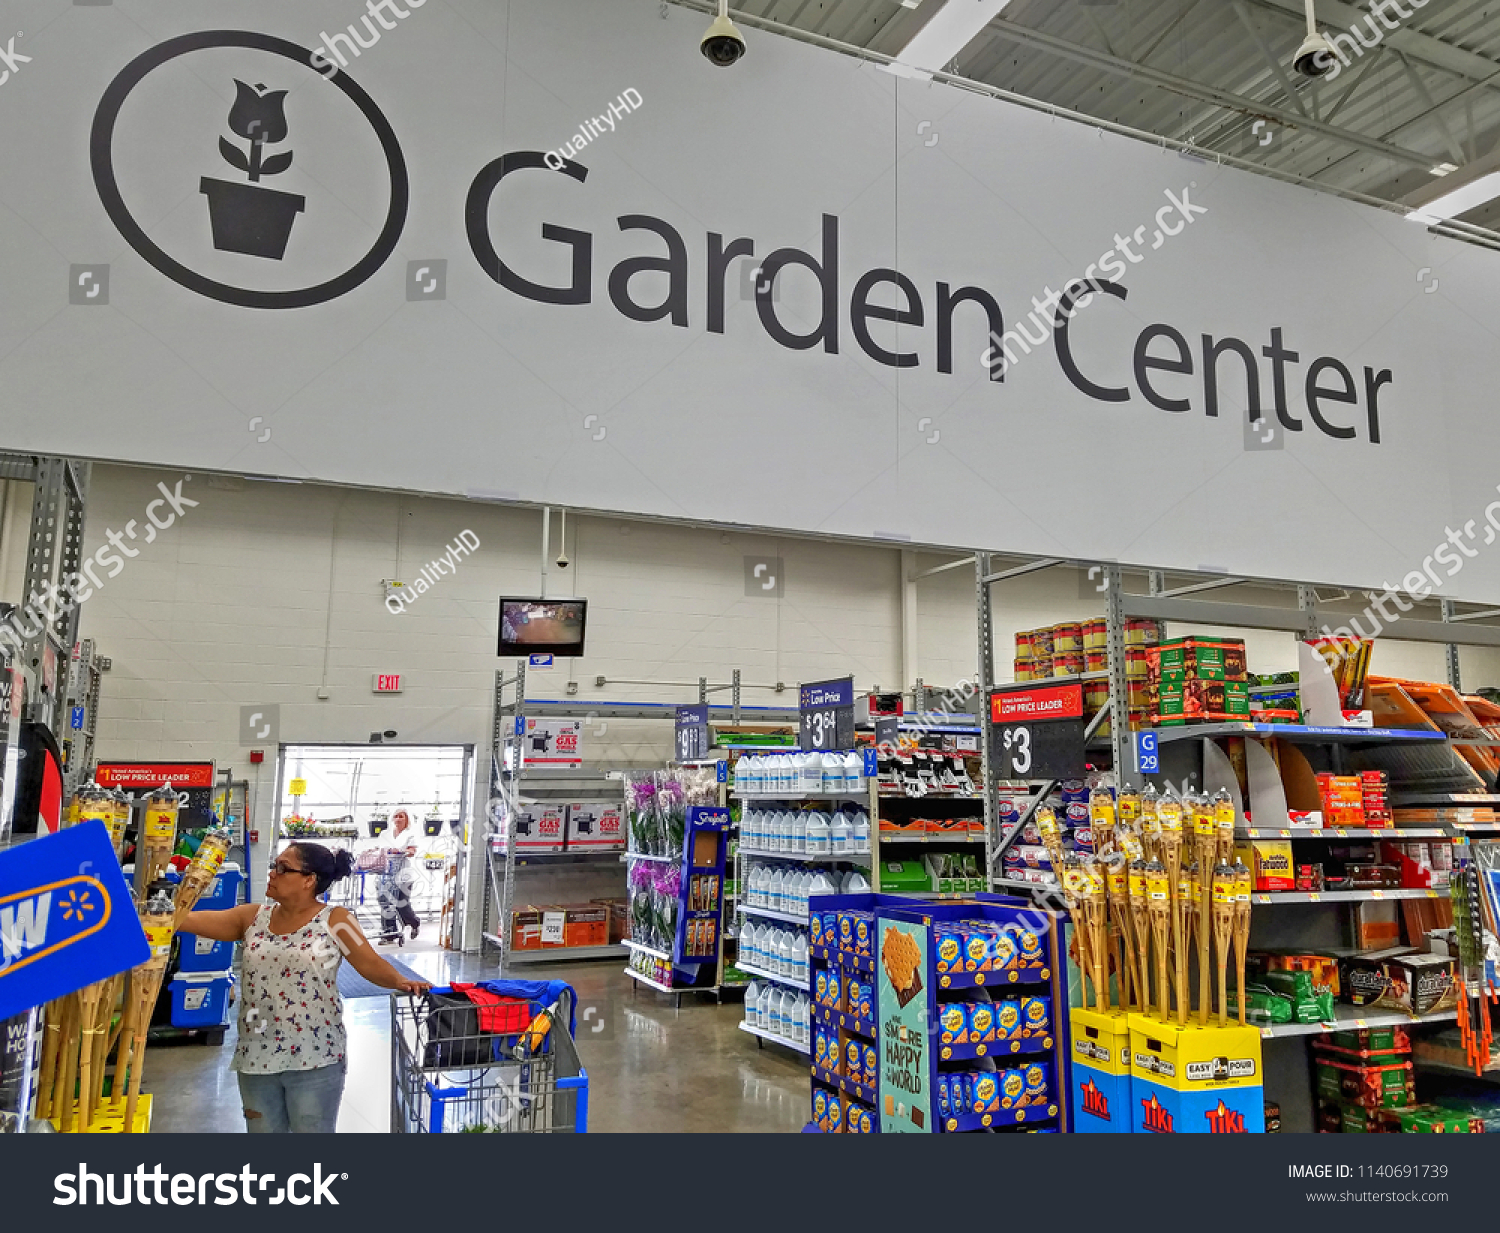 Walmart Retail Store Garden Lawn Center Stock Photo Edit Now